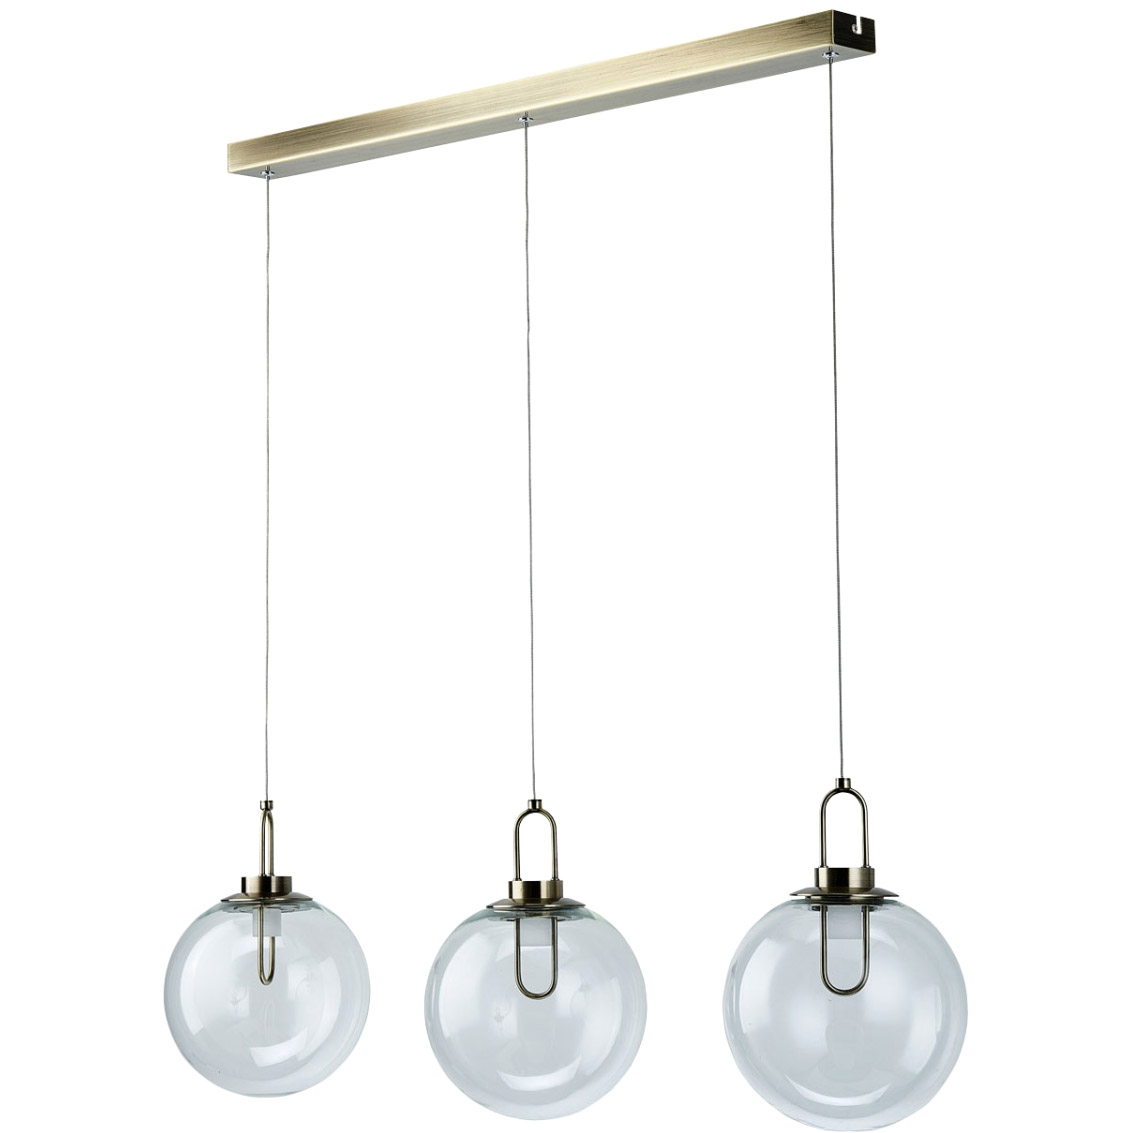 Prosta lampa wisząca Loft do jadalni lub kuchni 3 żarówki LED RegenBogen